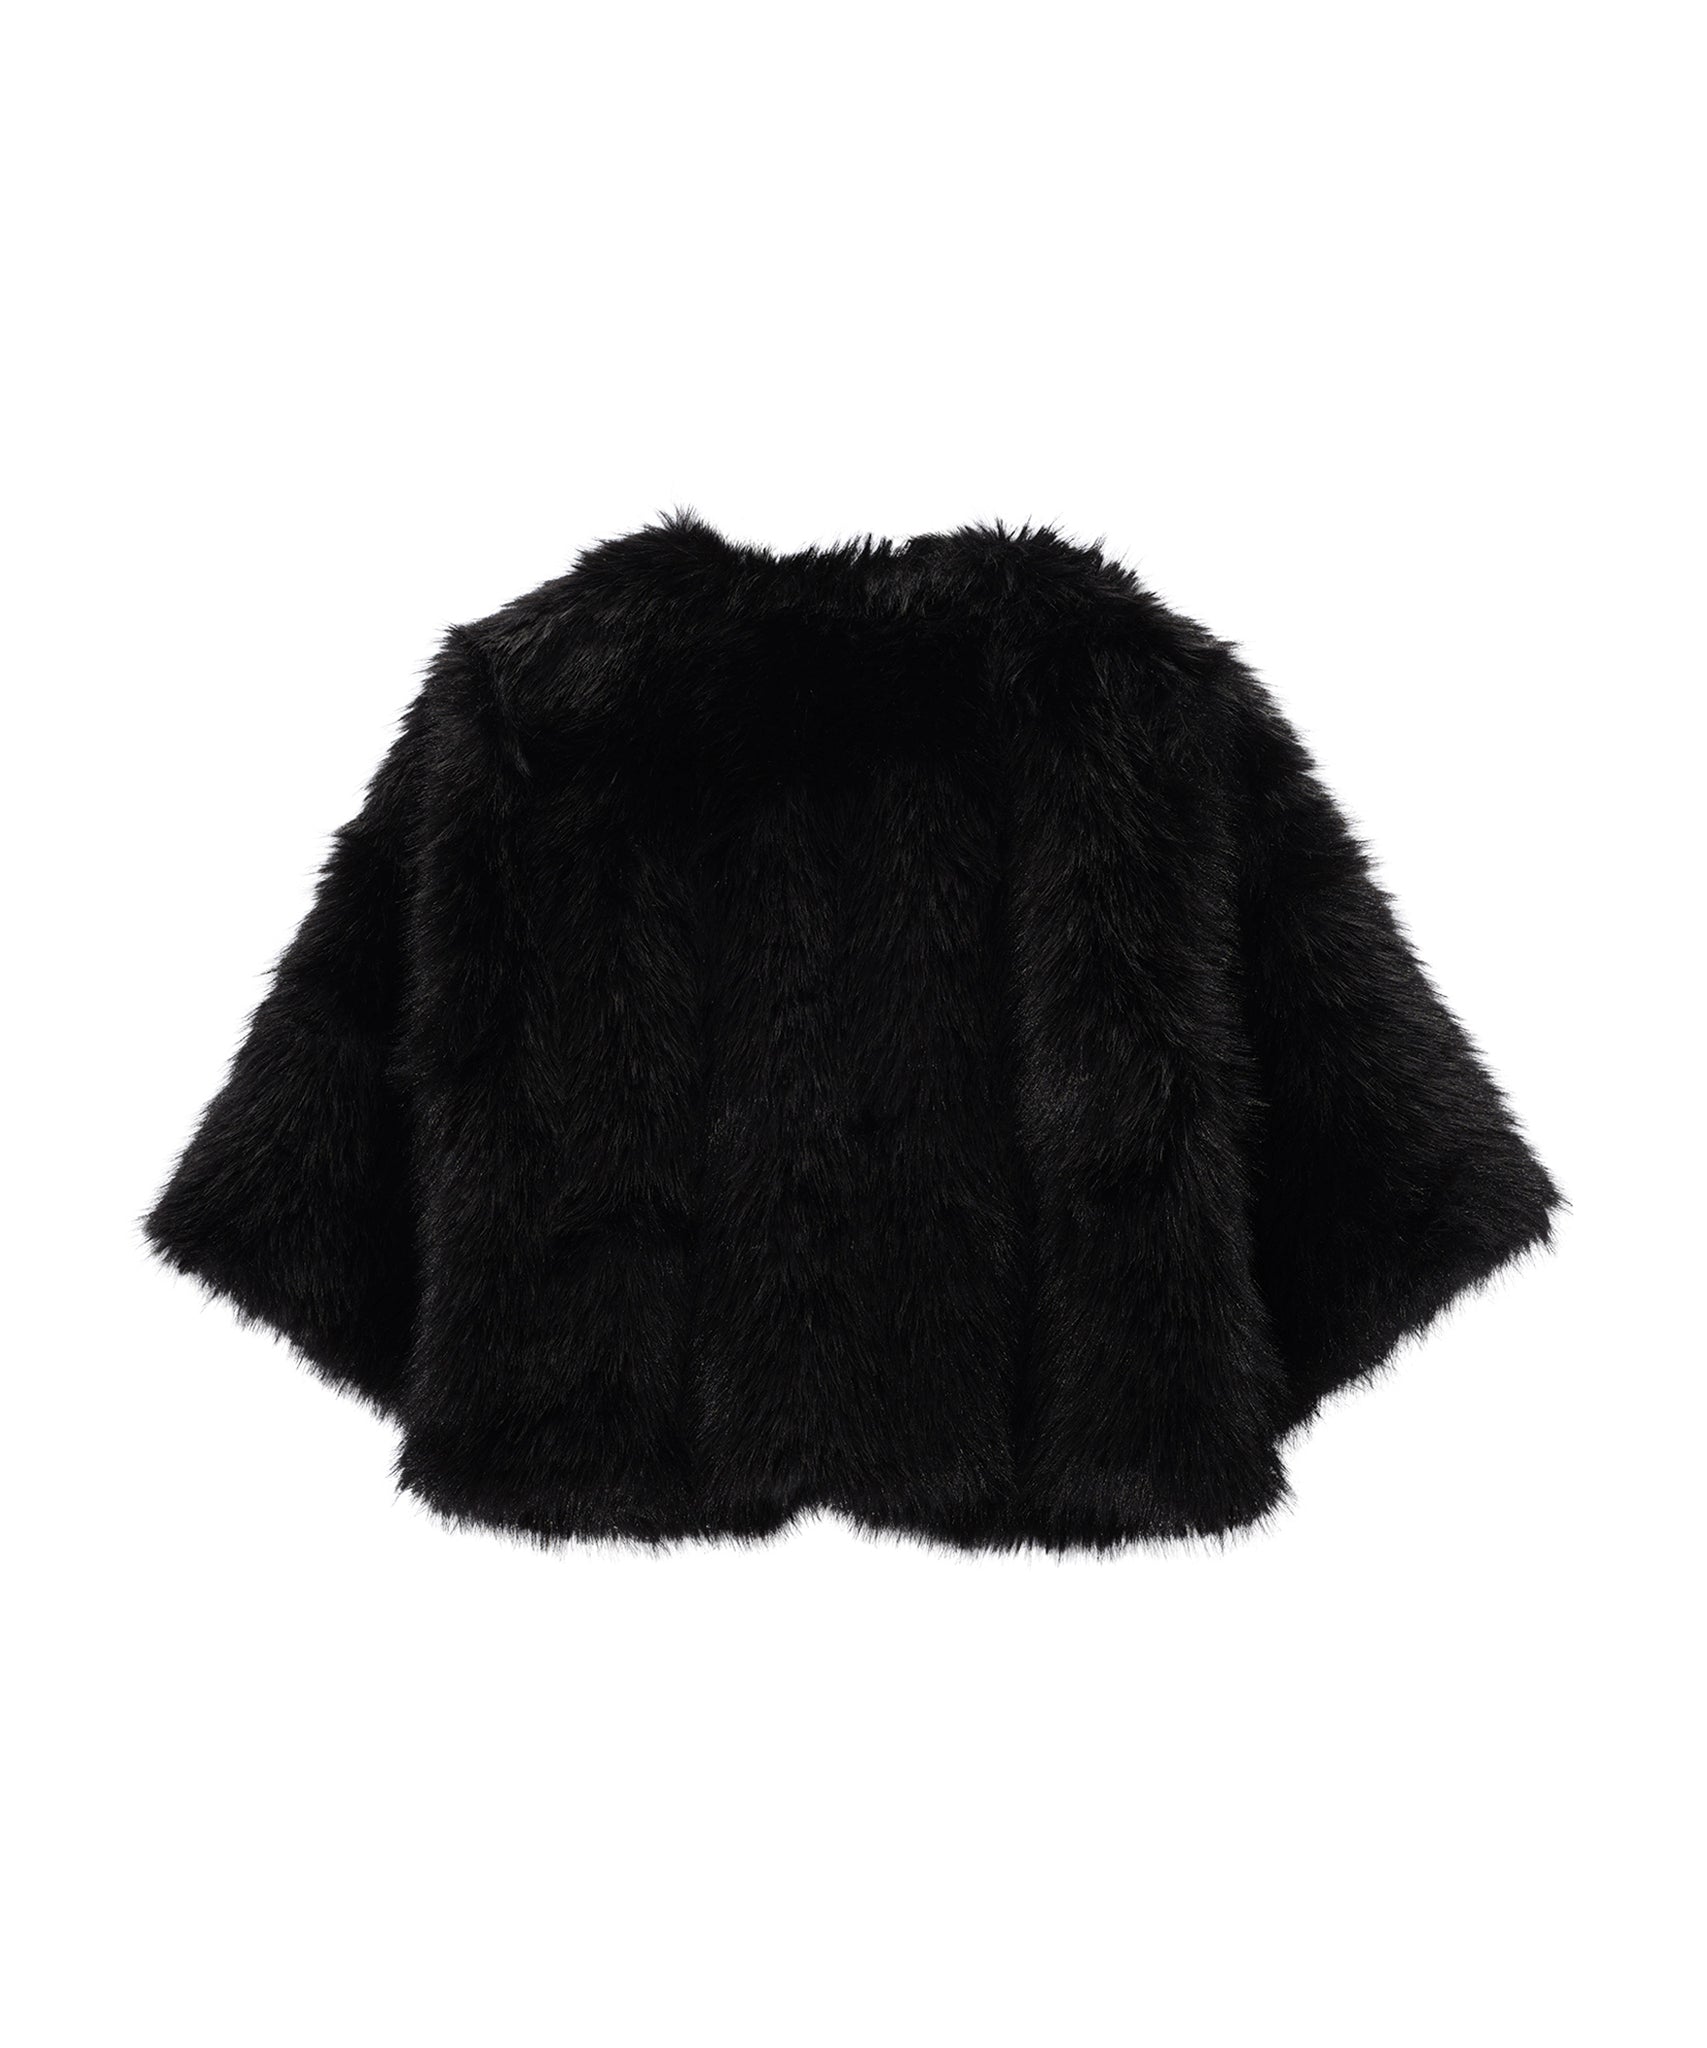 Faux Fur Cropped Nirvana Jacket in color Black